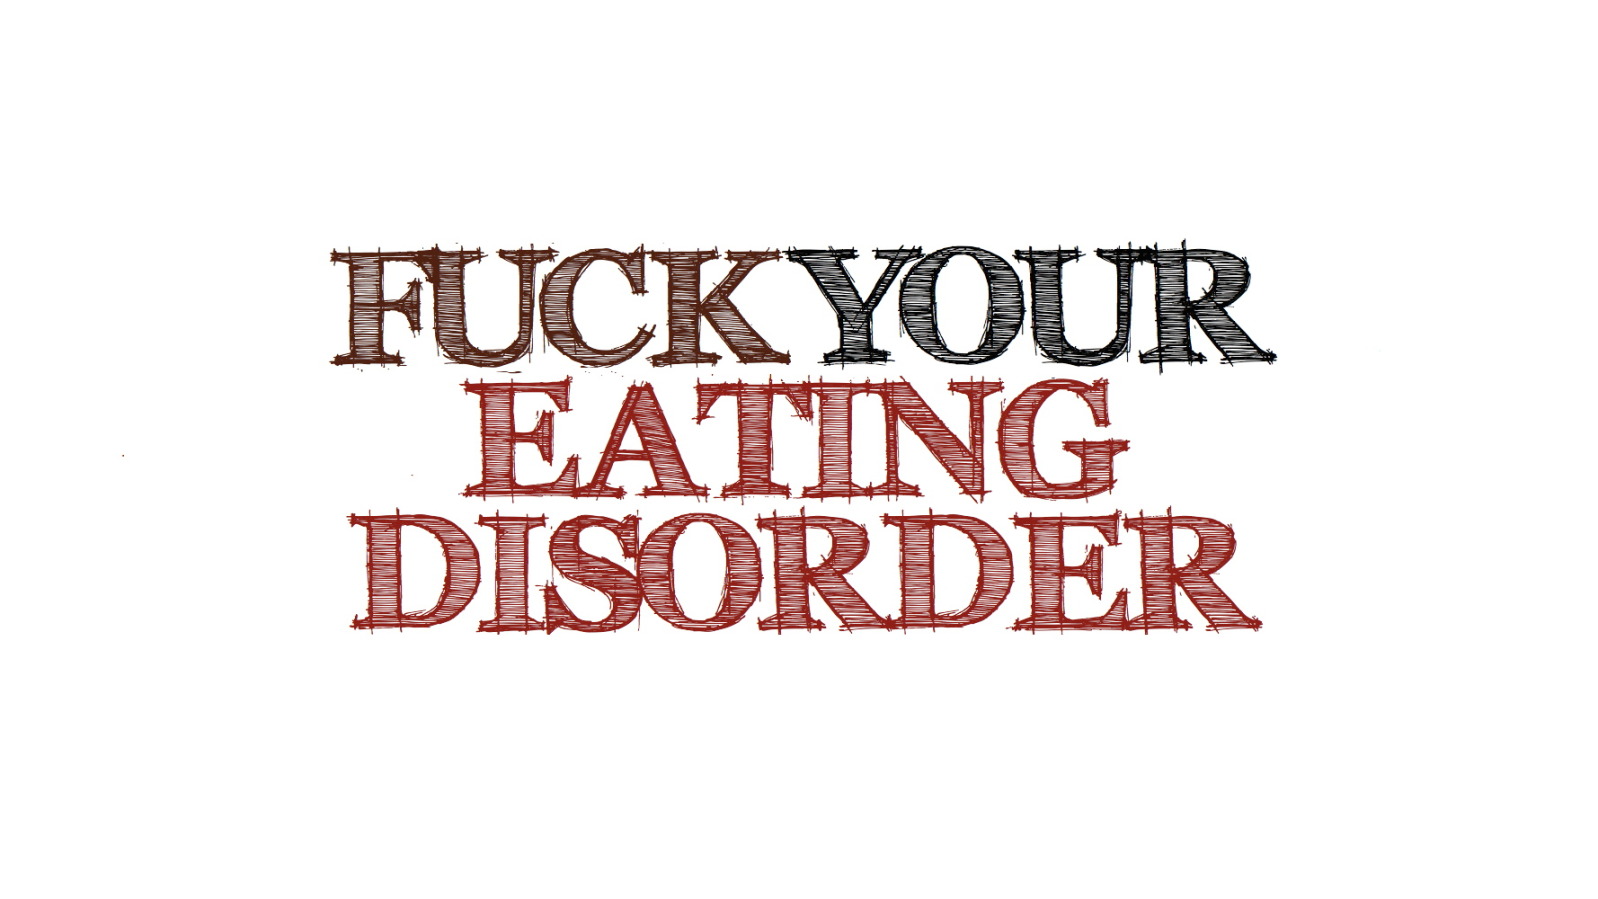 Eating Disorder Wallpapers